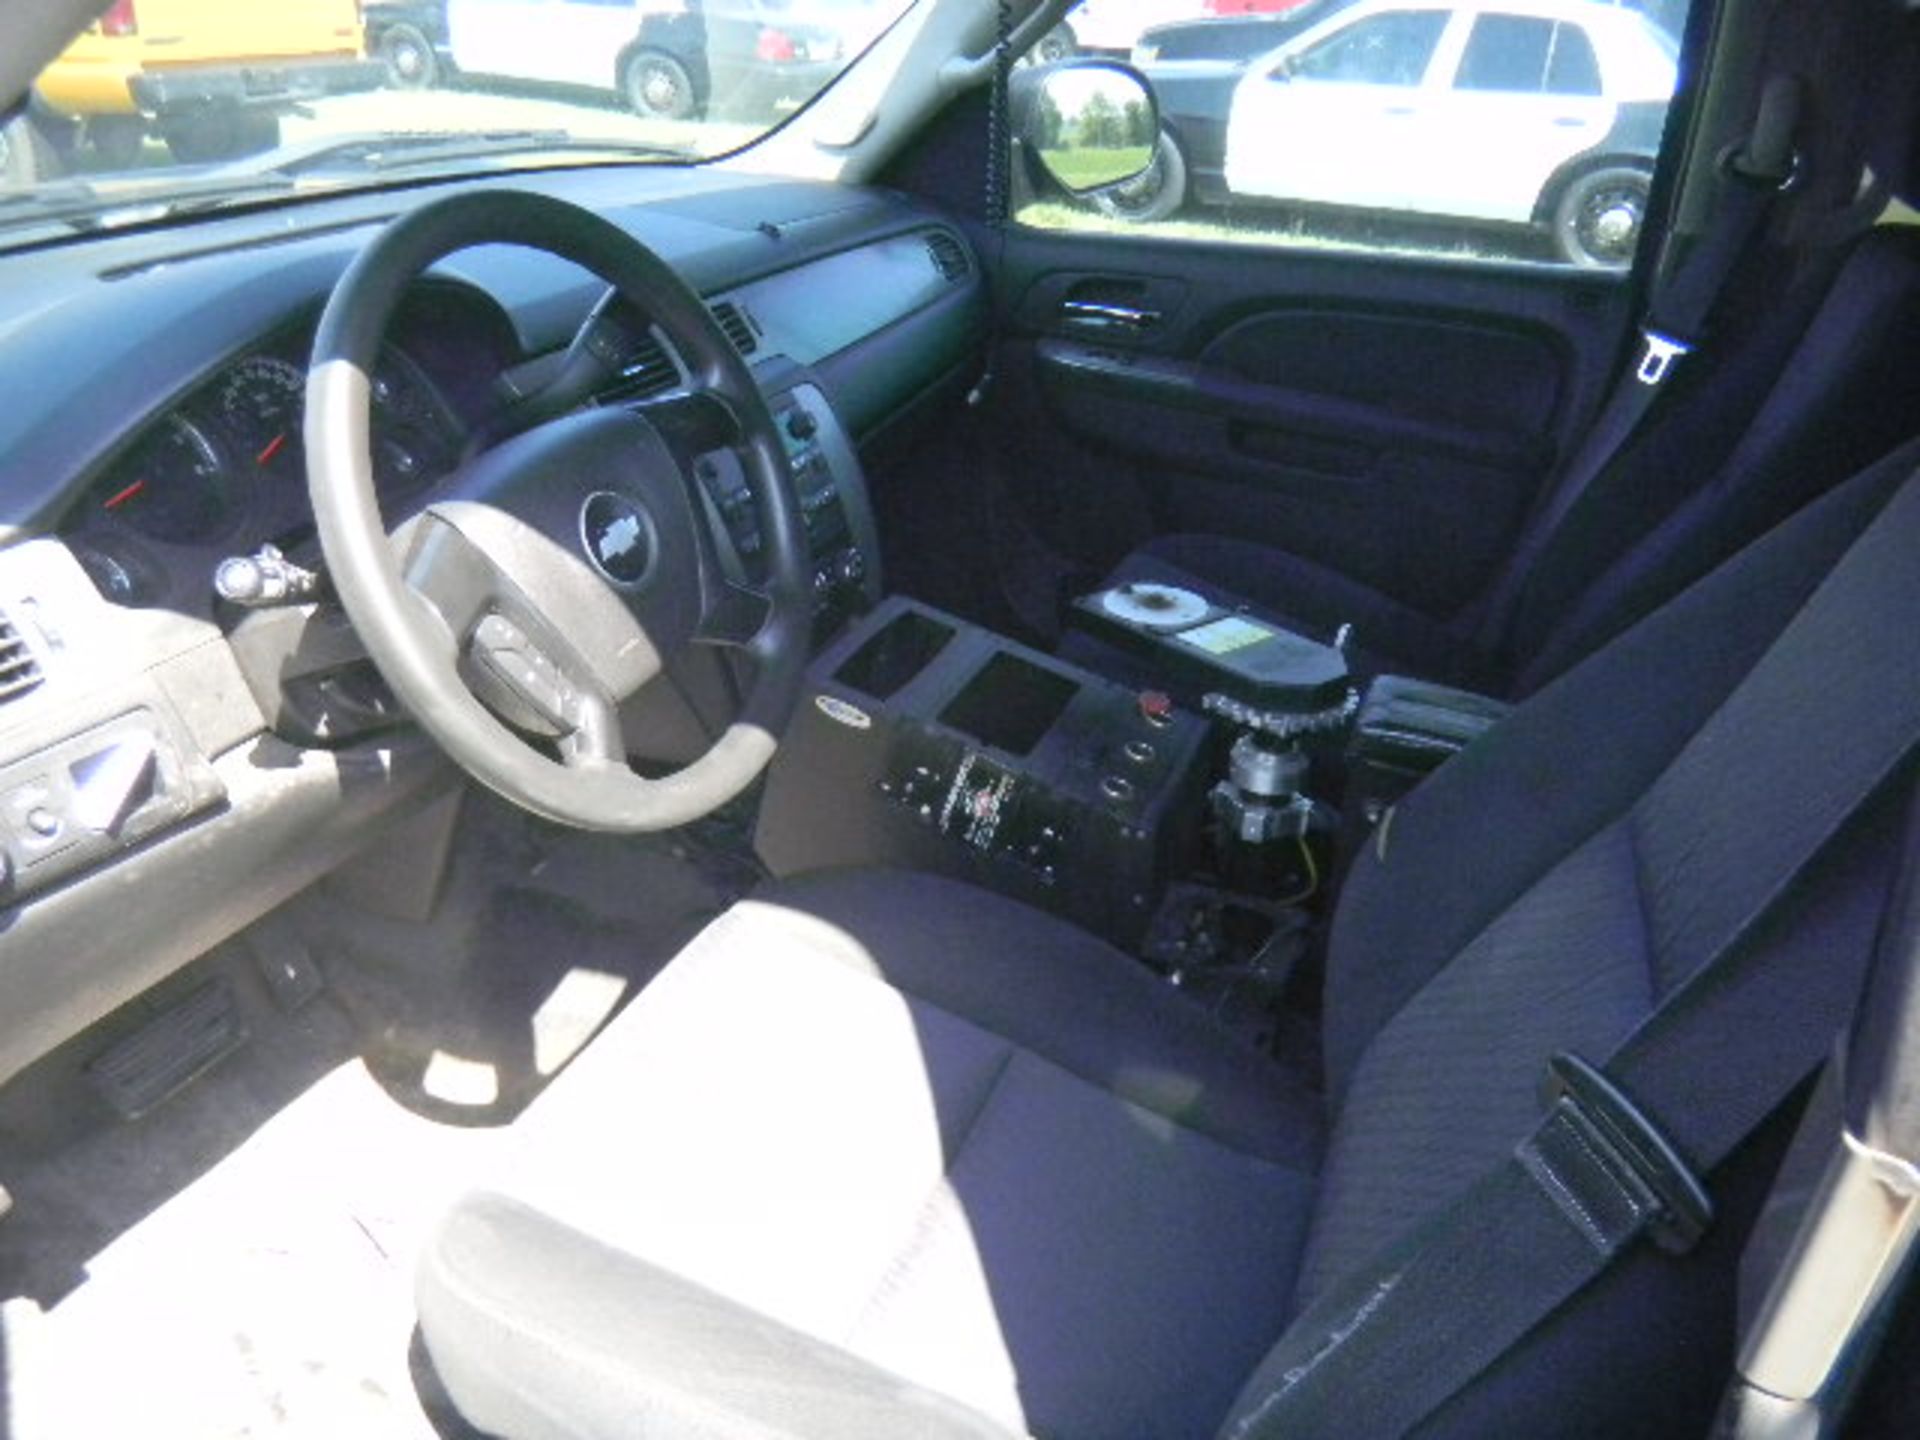 2013 Chevrolet Tahoe Patrol SUV - Condition Fair - Asset I.D. (460) - Last of Vin (DR283020) - Image 7 of 10